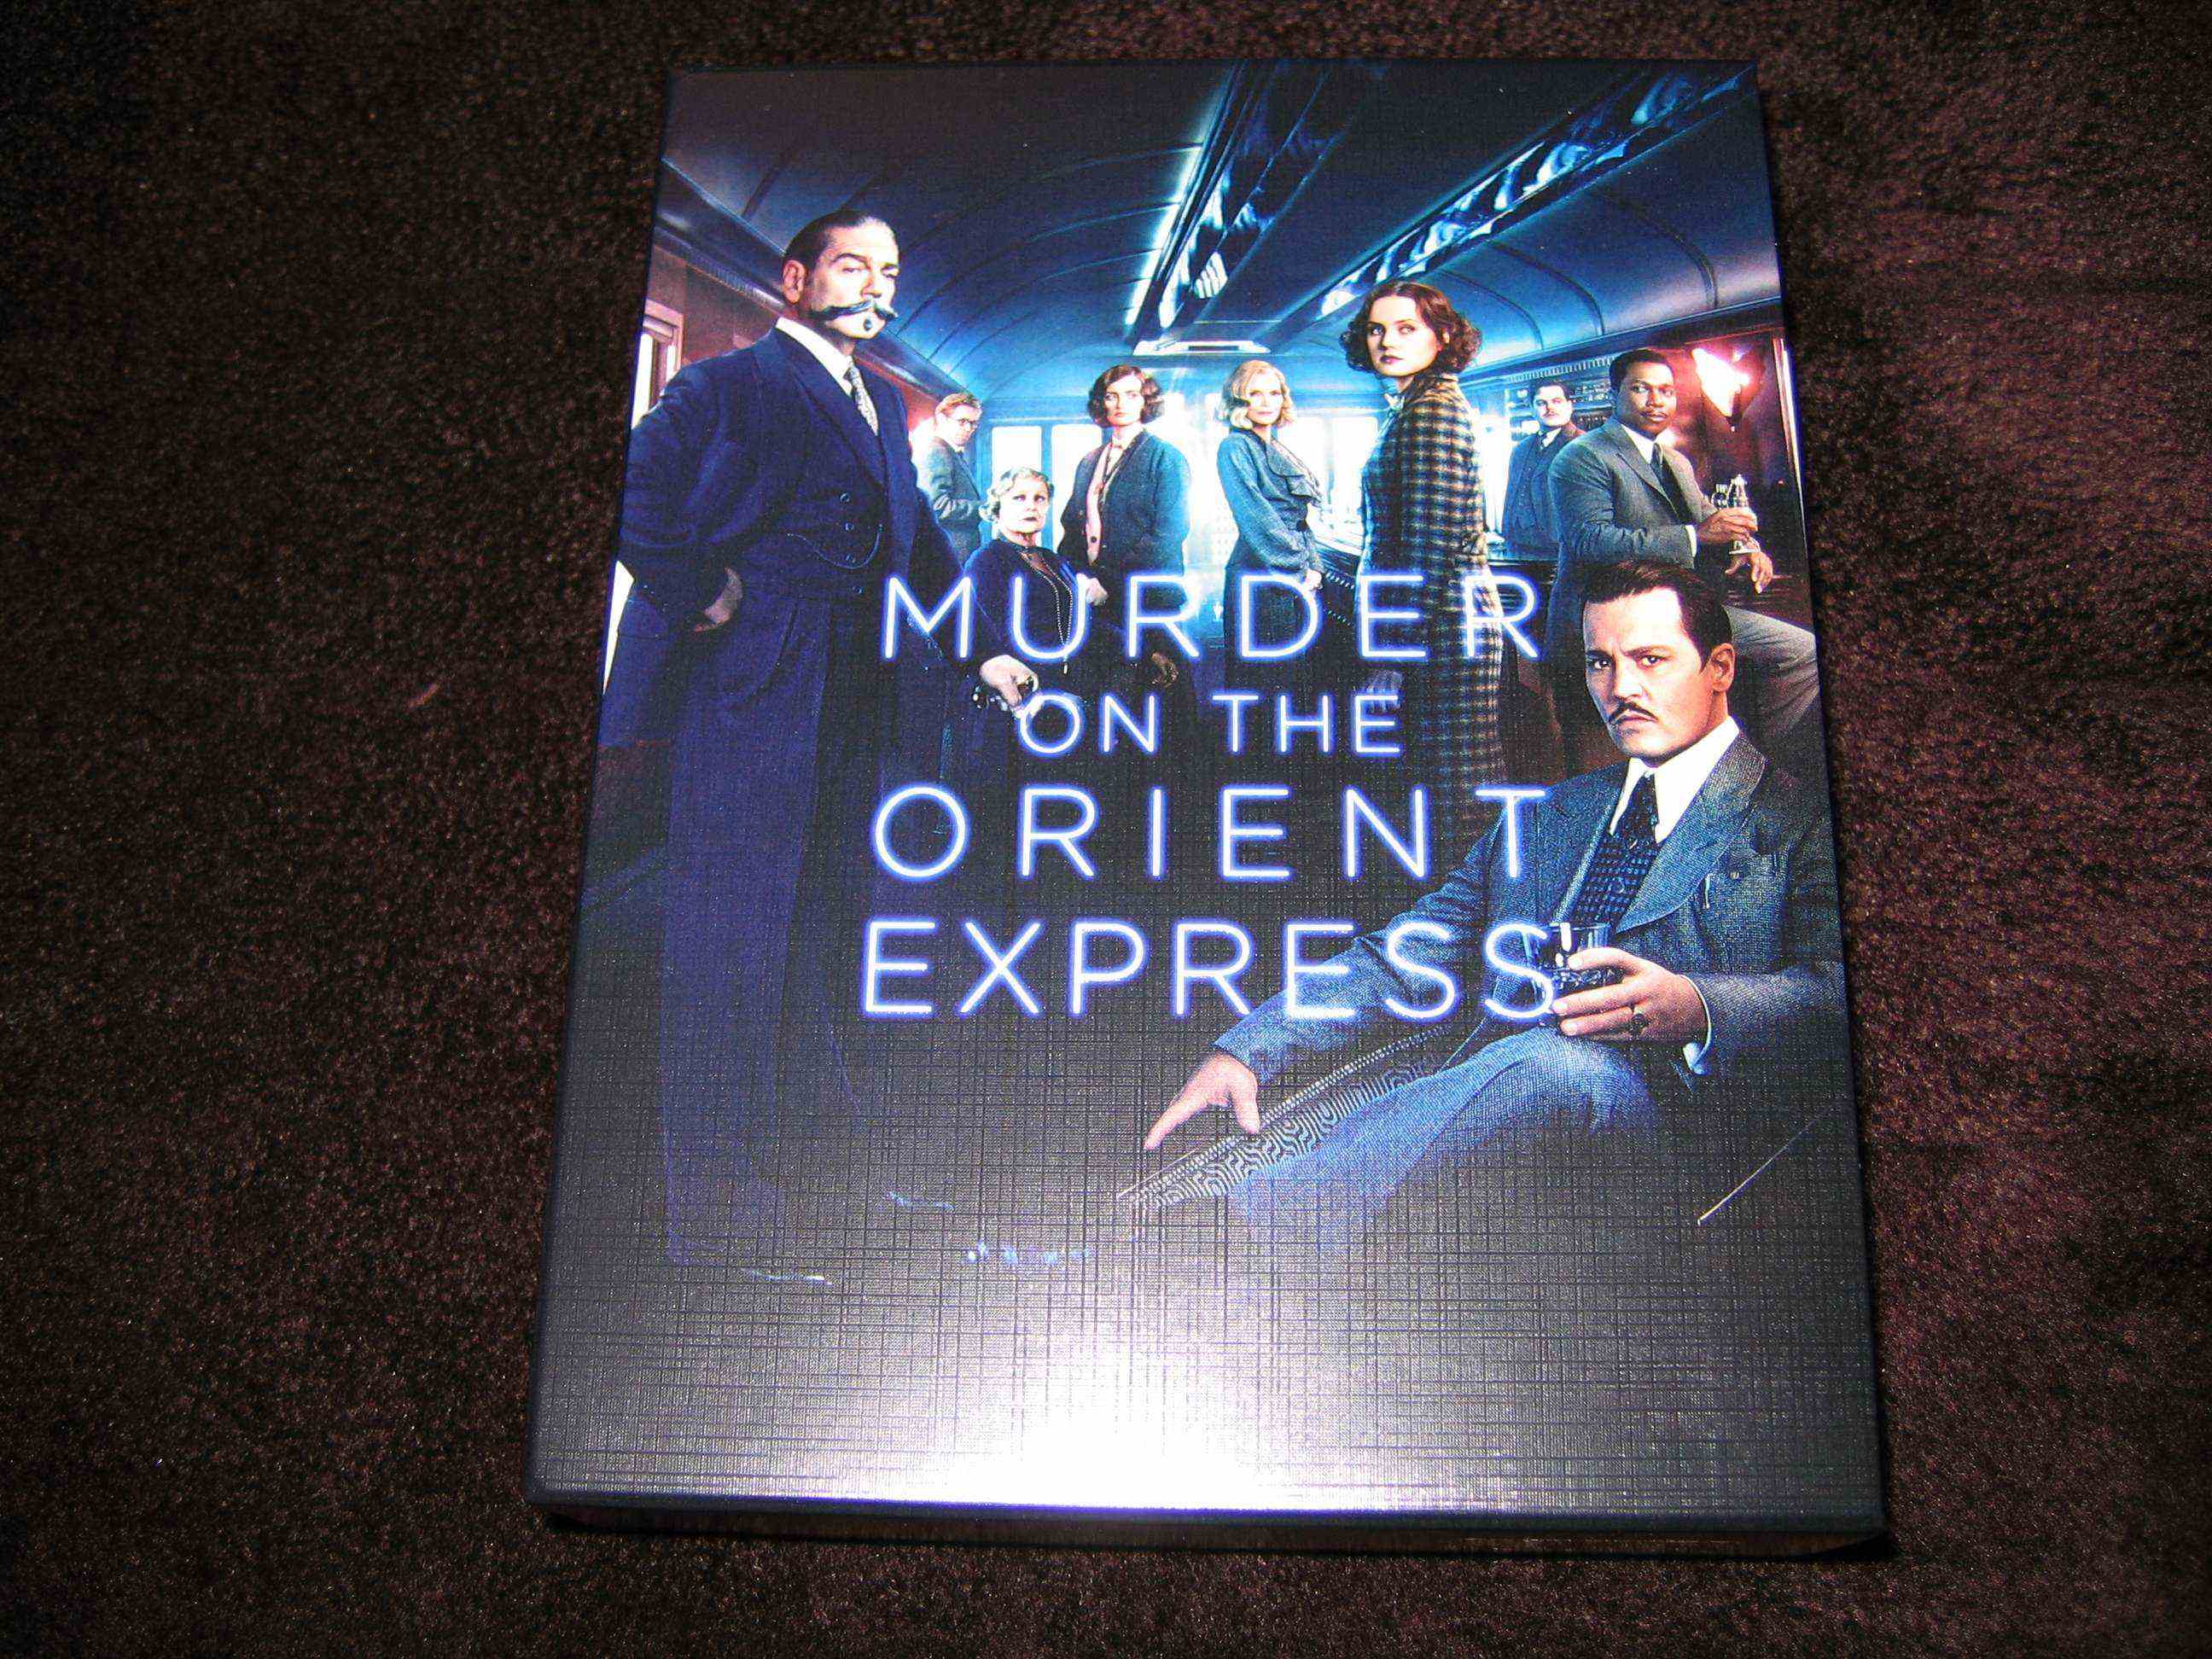 Murder_on_the_orient_express (CZ)_b.JPG